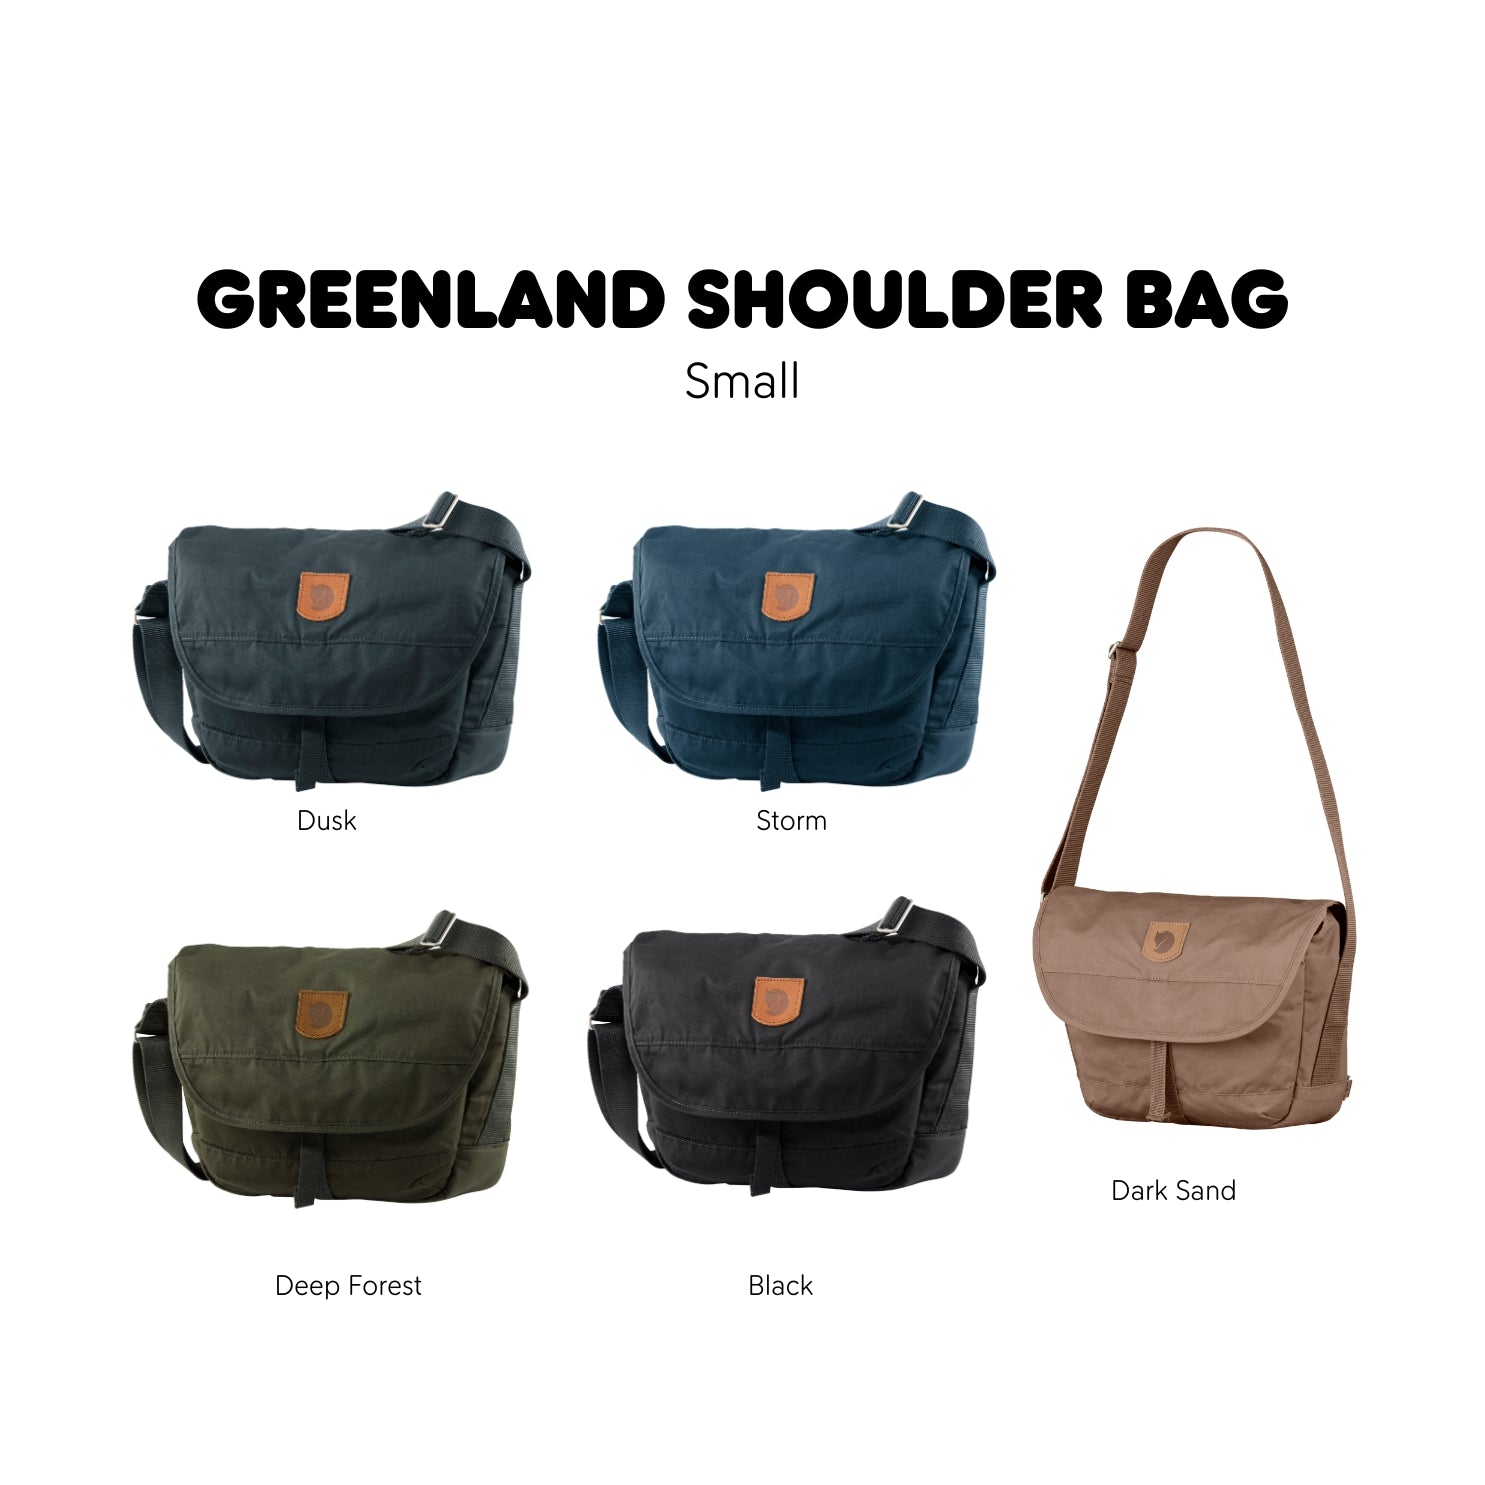 Greenland Shoulder Bag Small